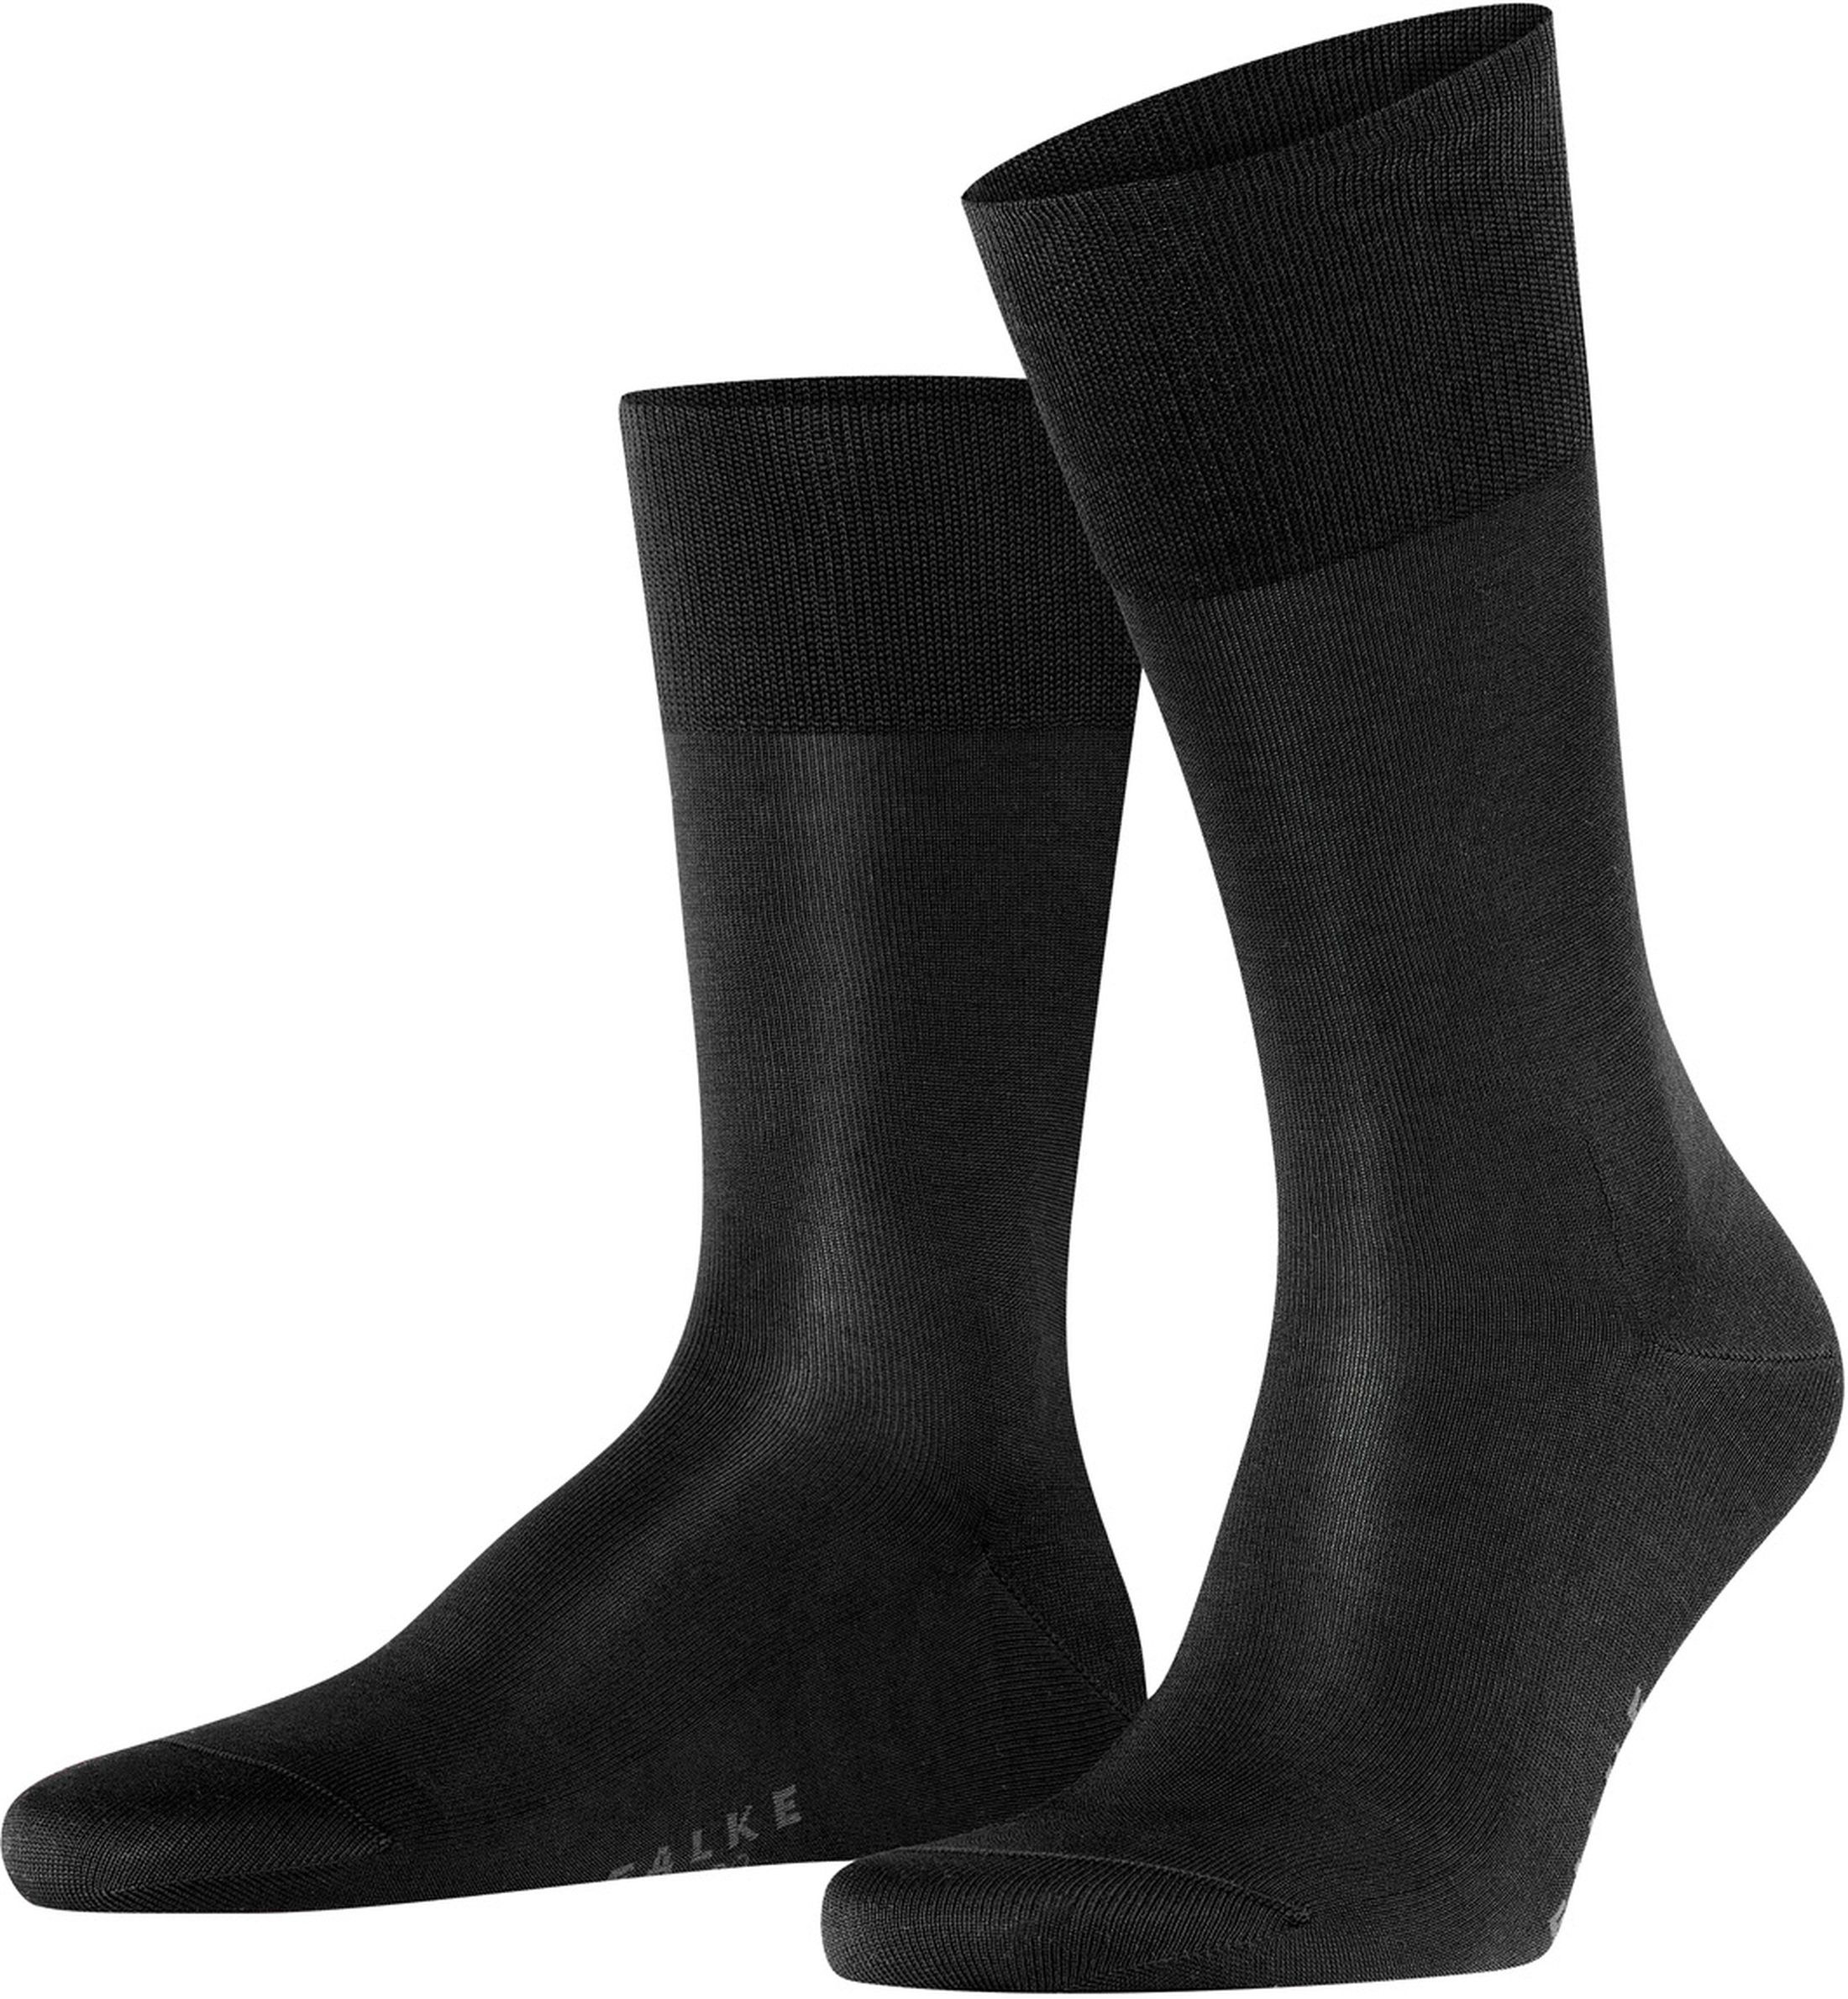 Falke Tiago Socks 3000 Black size 39-40